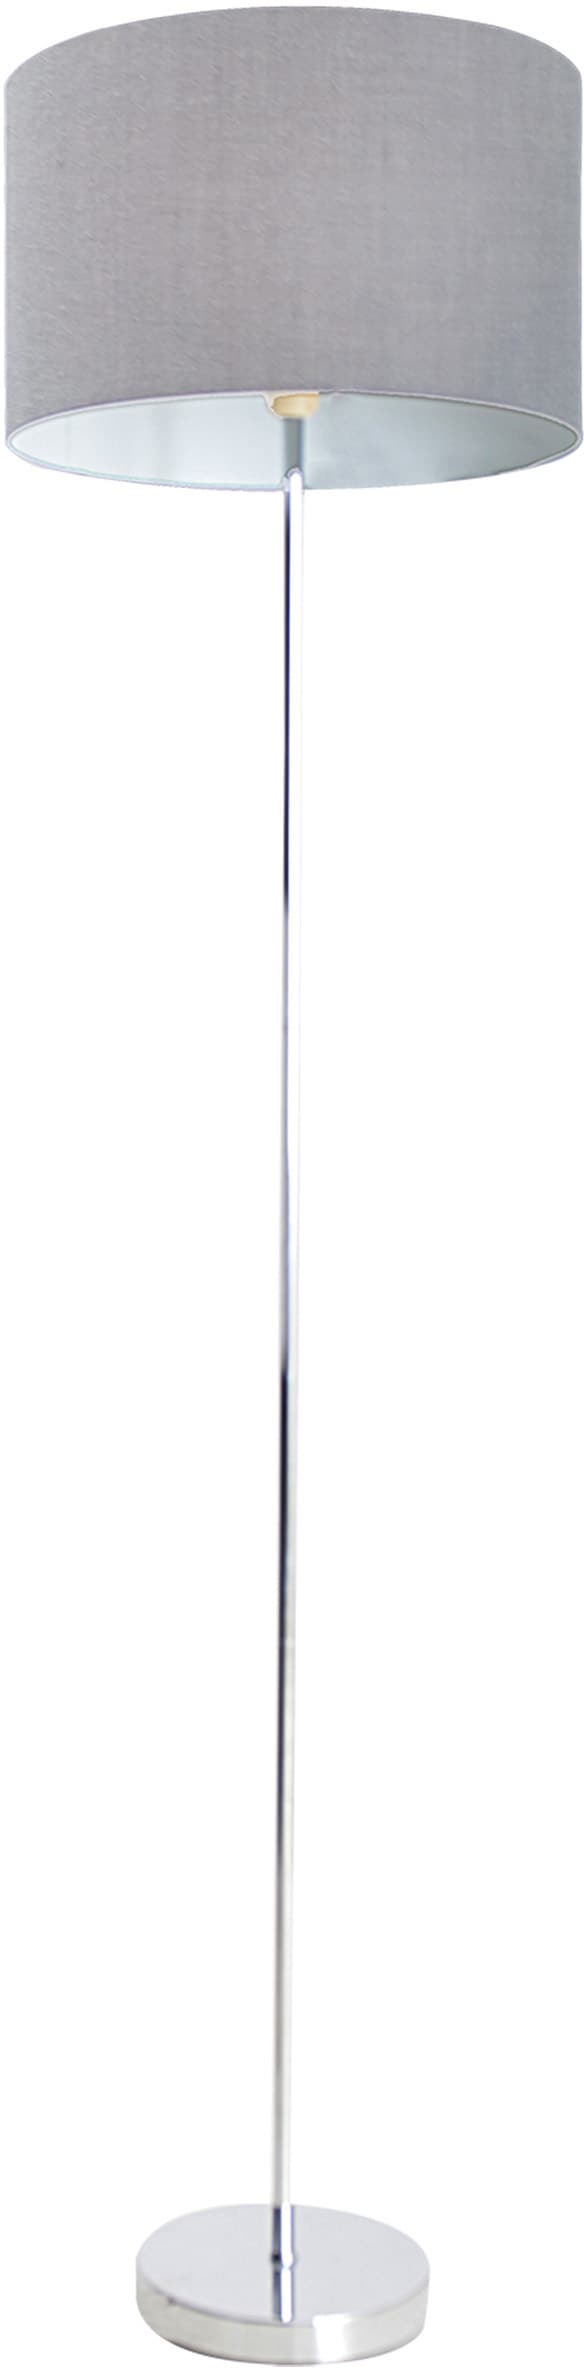 Stehlampe »New York«, 1 flammig-flammig, Höhe 160cm Durchmesser 34,5cm 1x E27 max 40W...